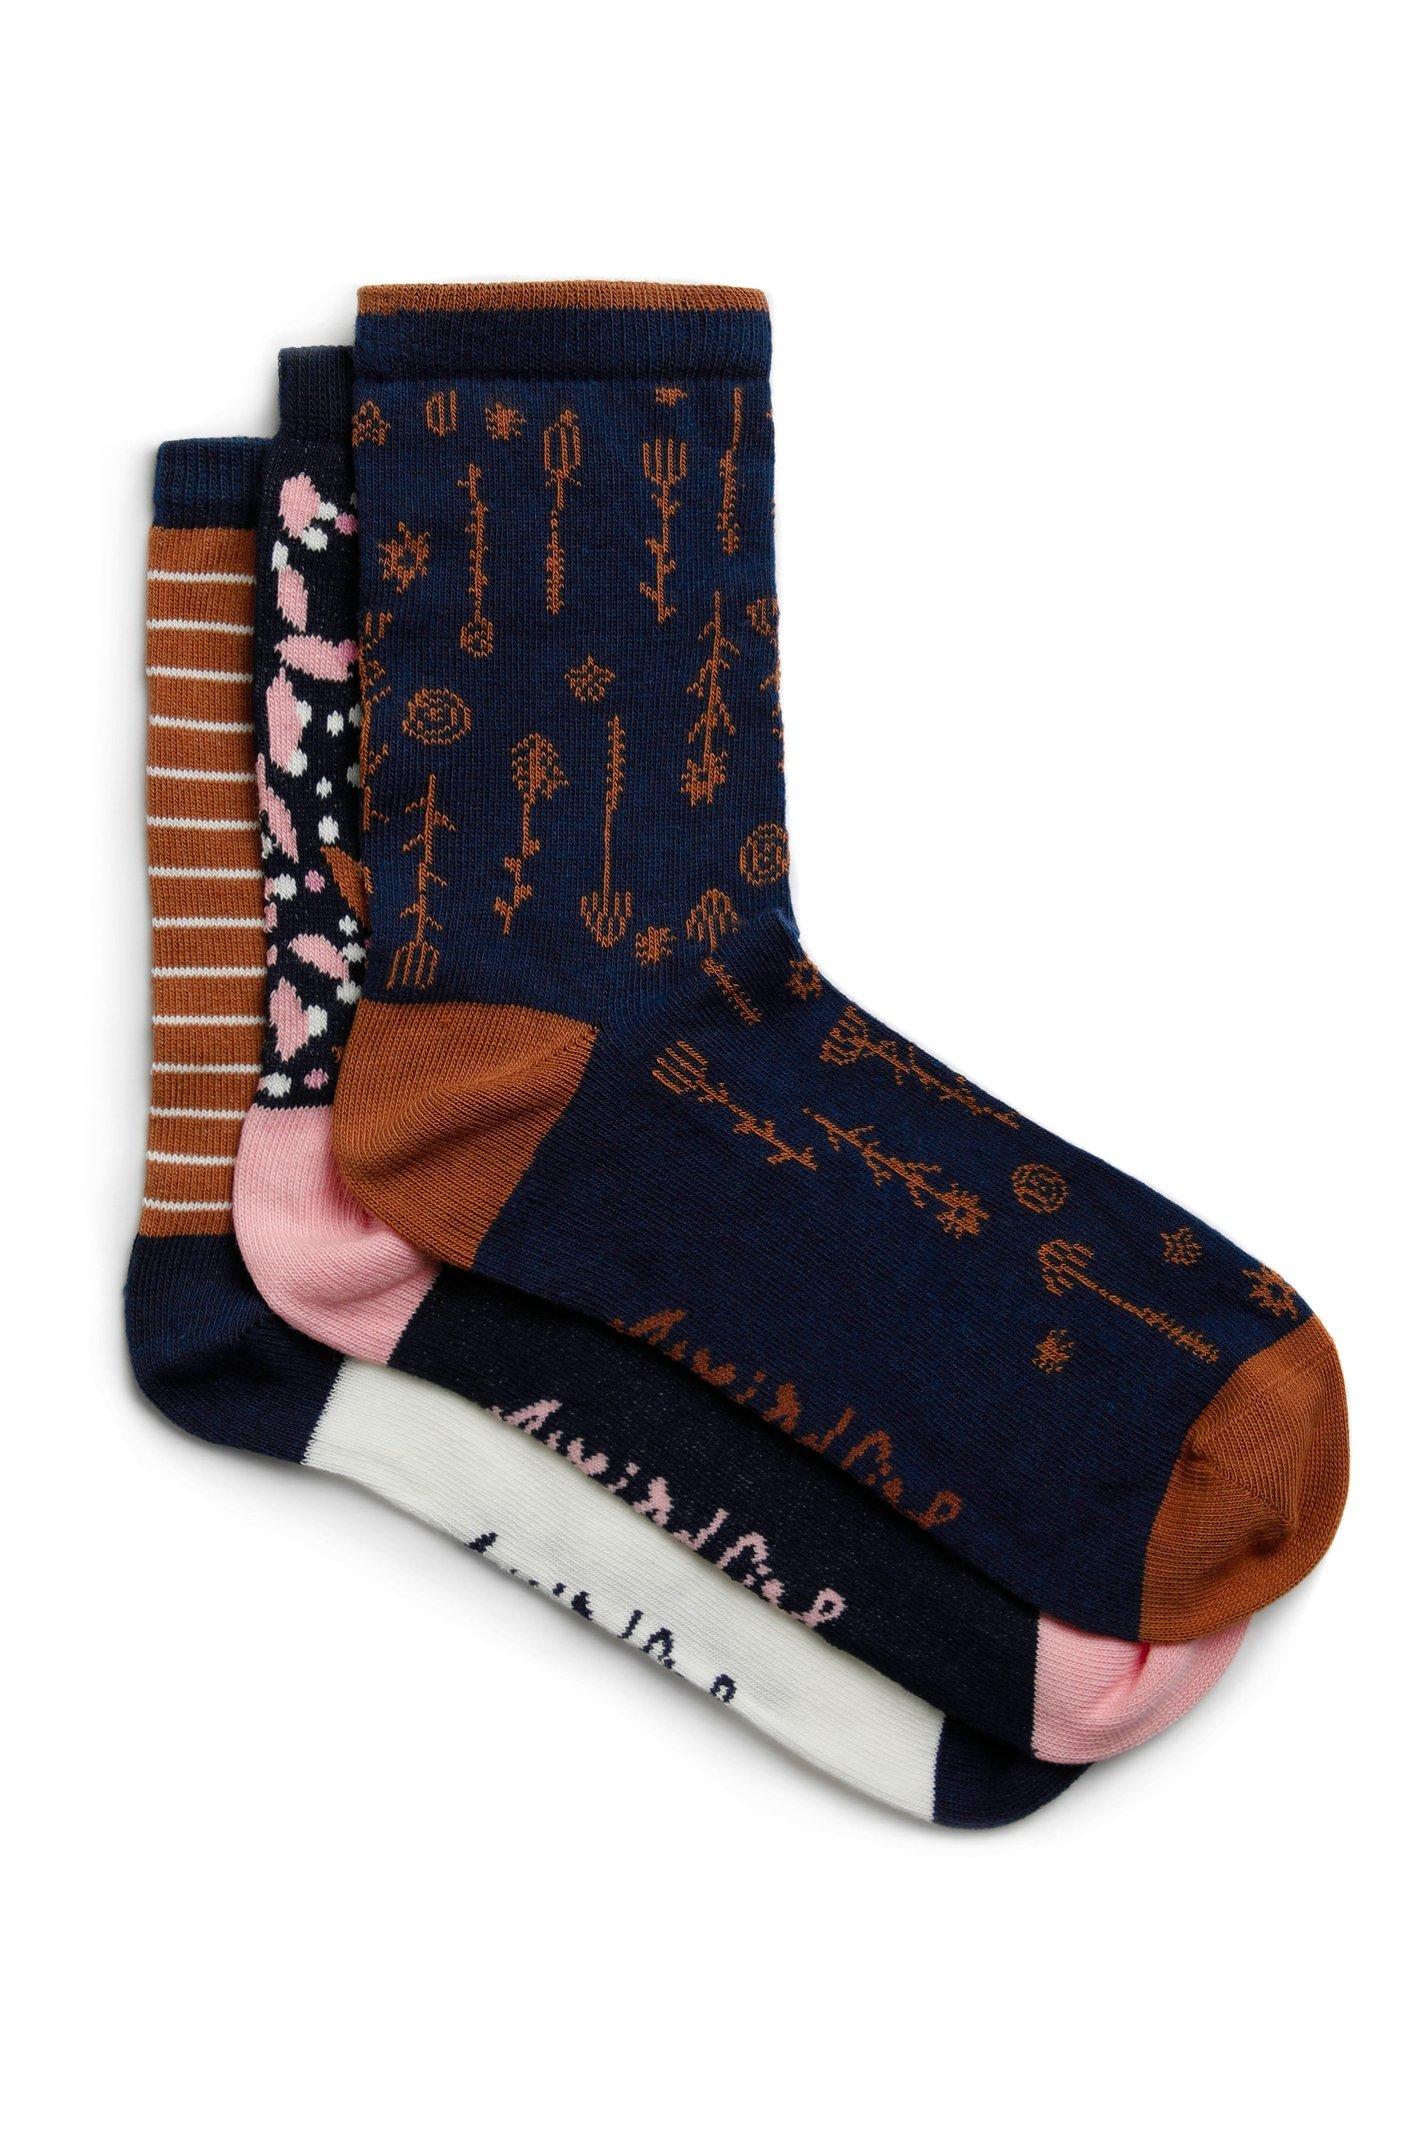 Parade Eco Patterned Socks 3 Pack